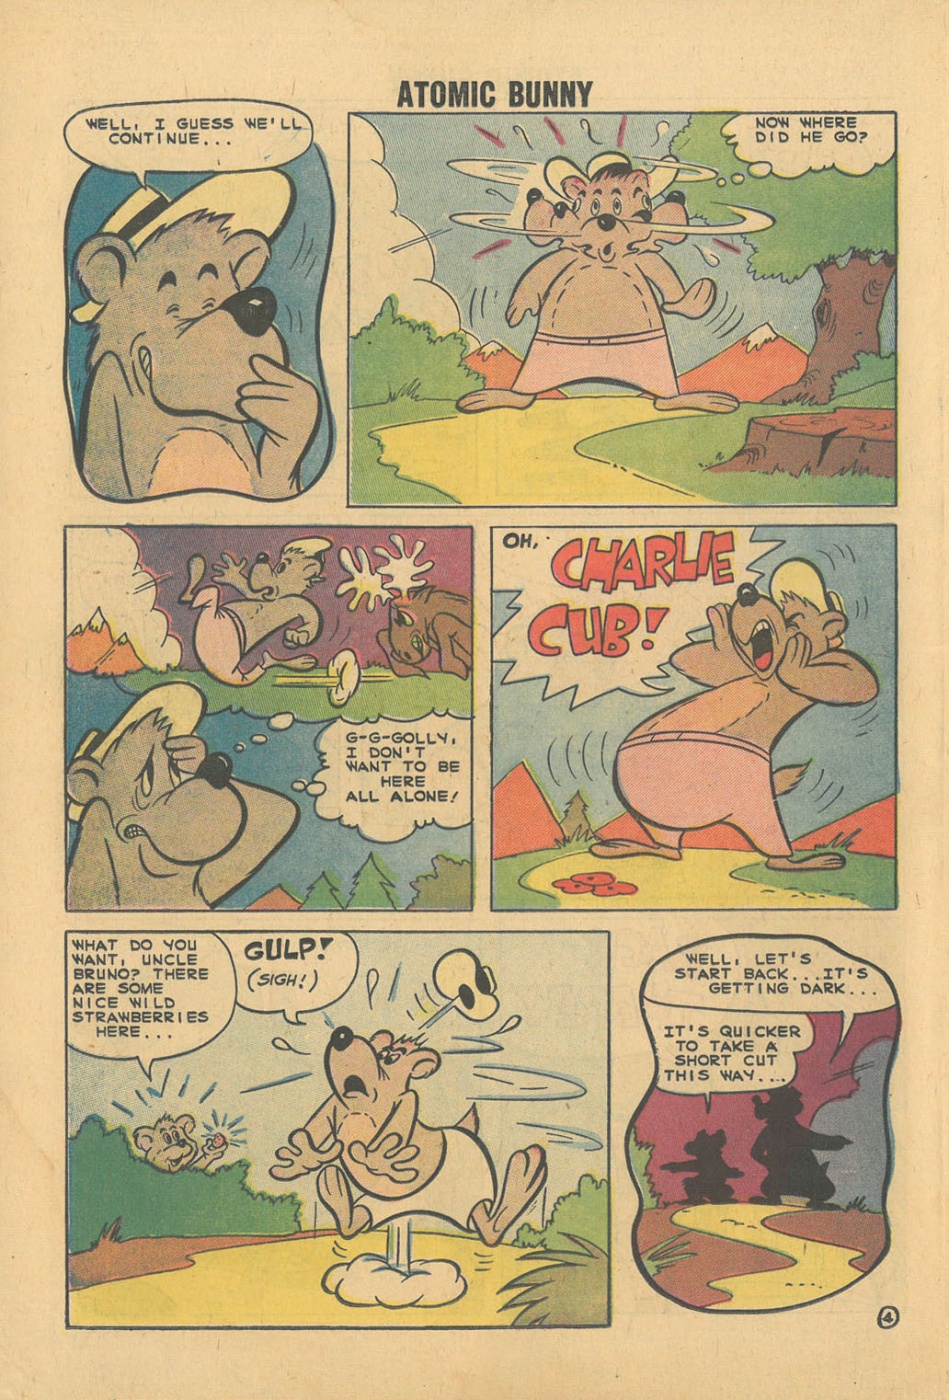 Atomic-Bunny-Comic-Strips (c) (25)